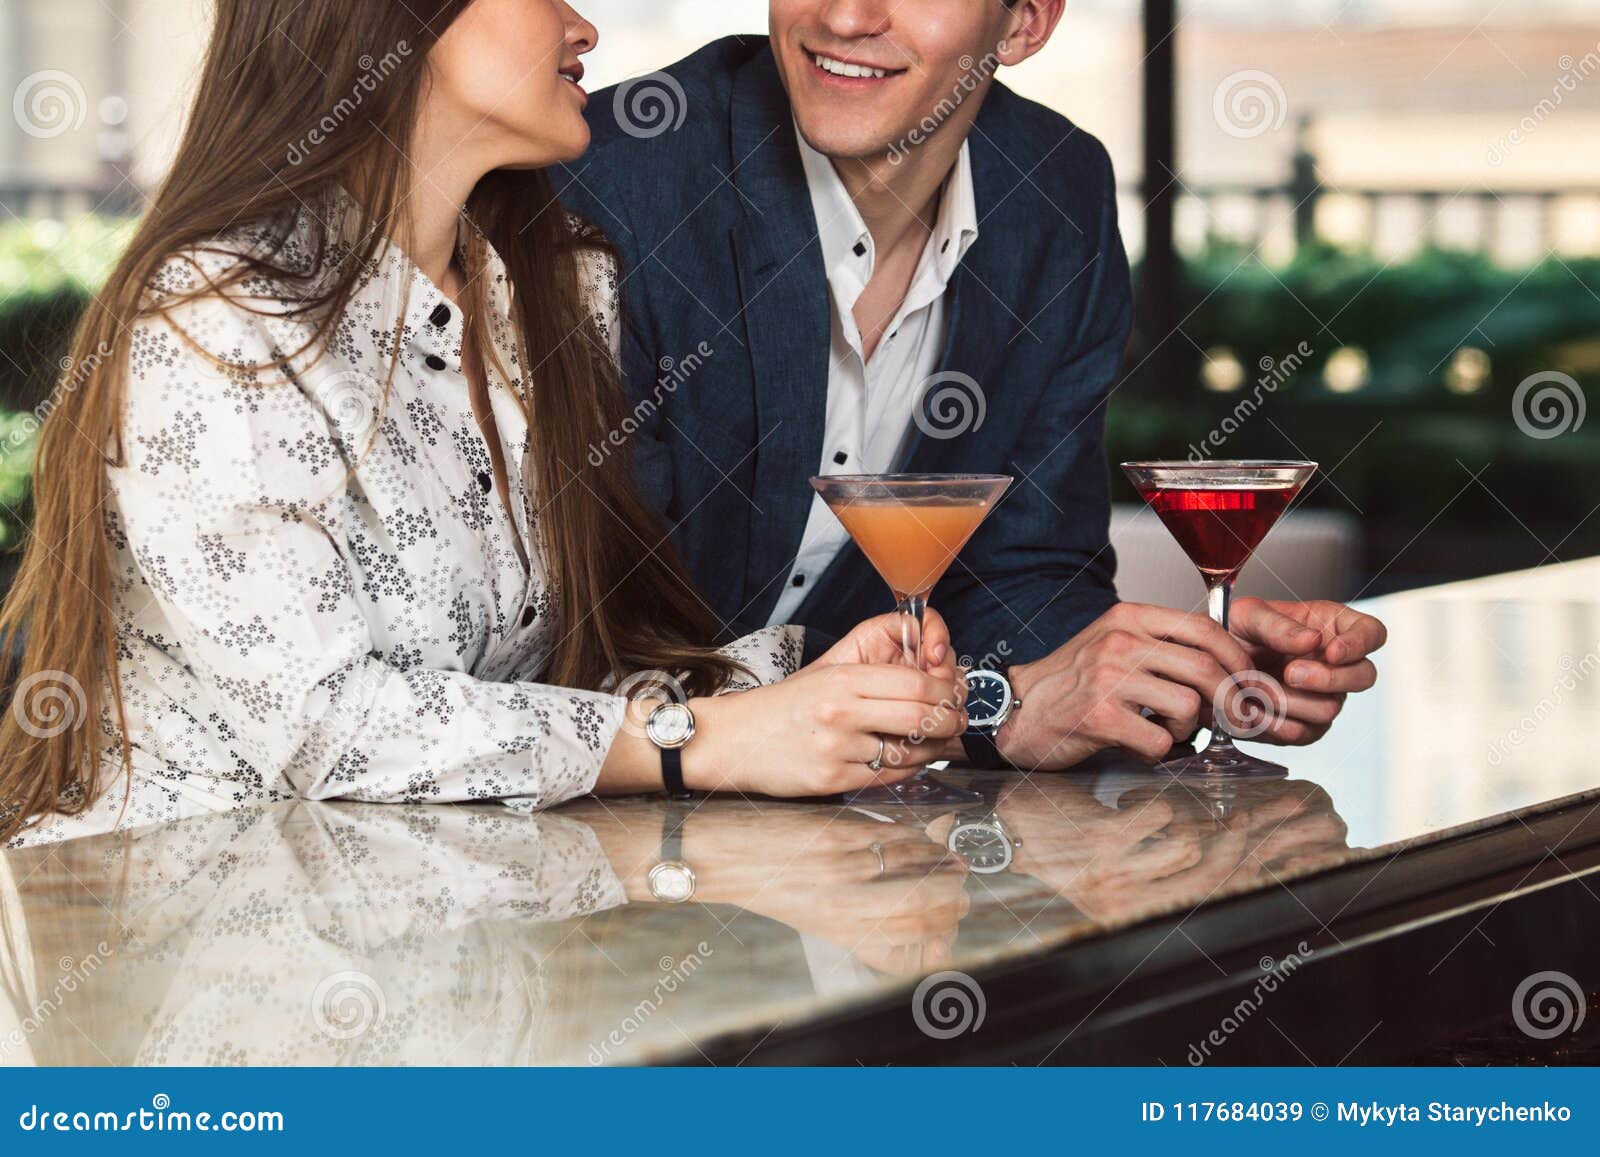 Dating alcoholic man